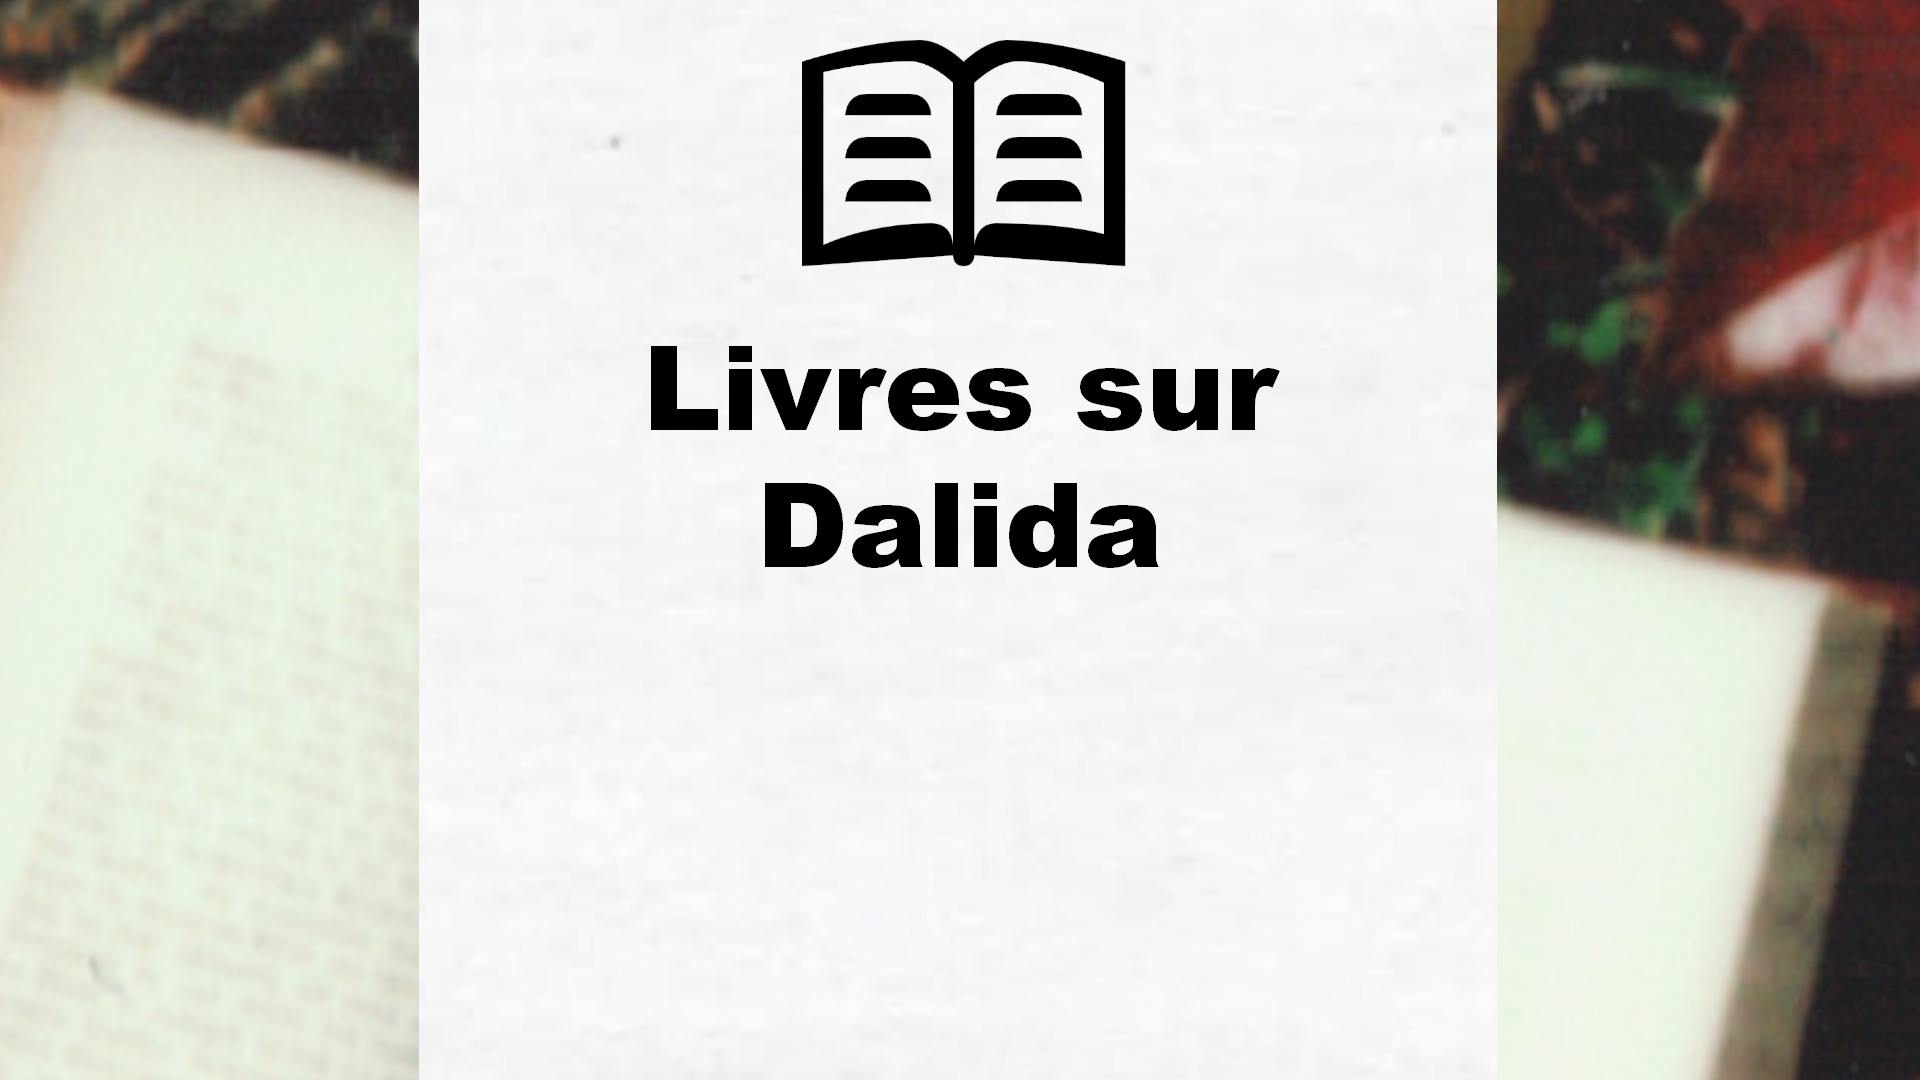 Livres sur Dalida